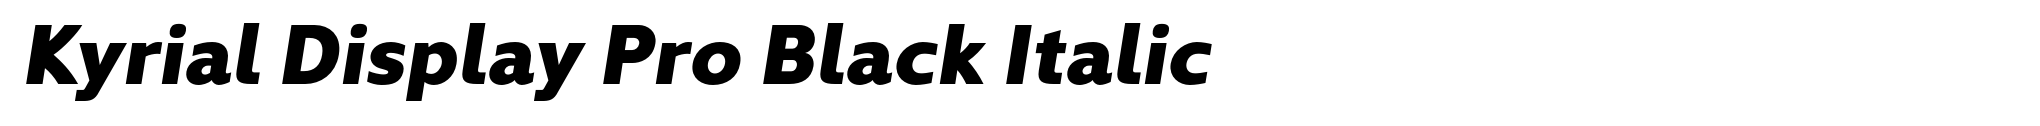 Kyrial Display Pro Black Italic image